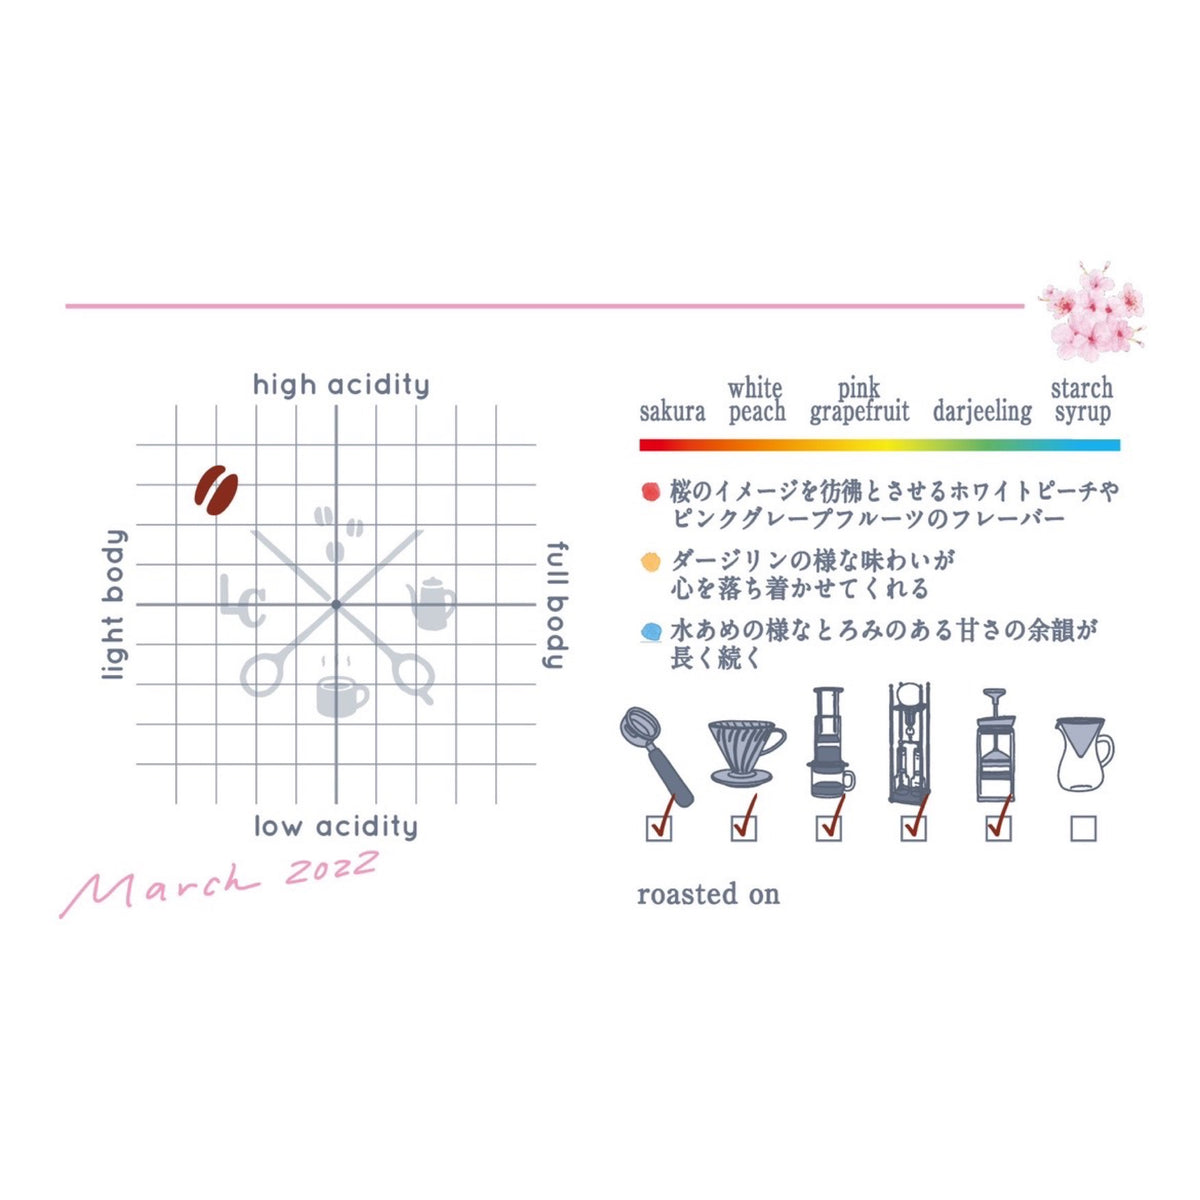 【March Limited】USUZAKURA Blend ~薄桜~